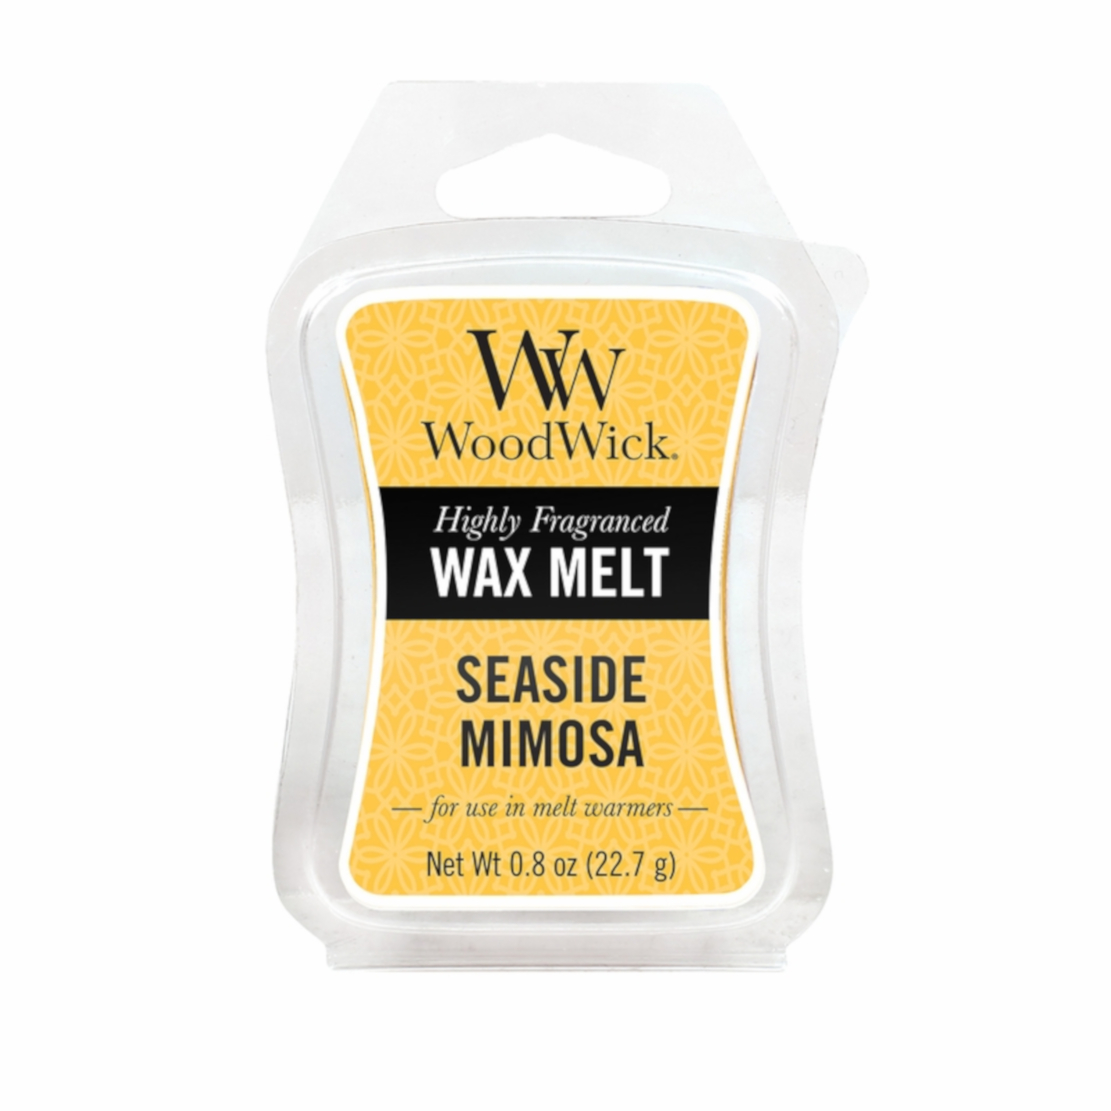 Woodwick Seaside Mimosa Wax Melt